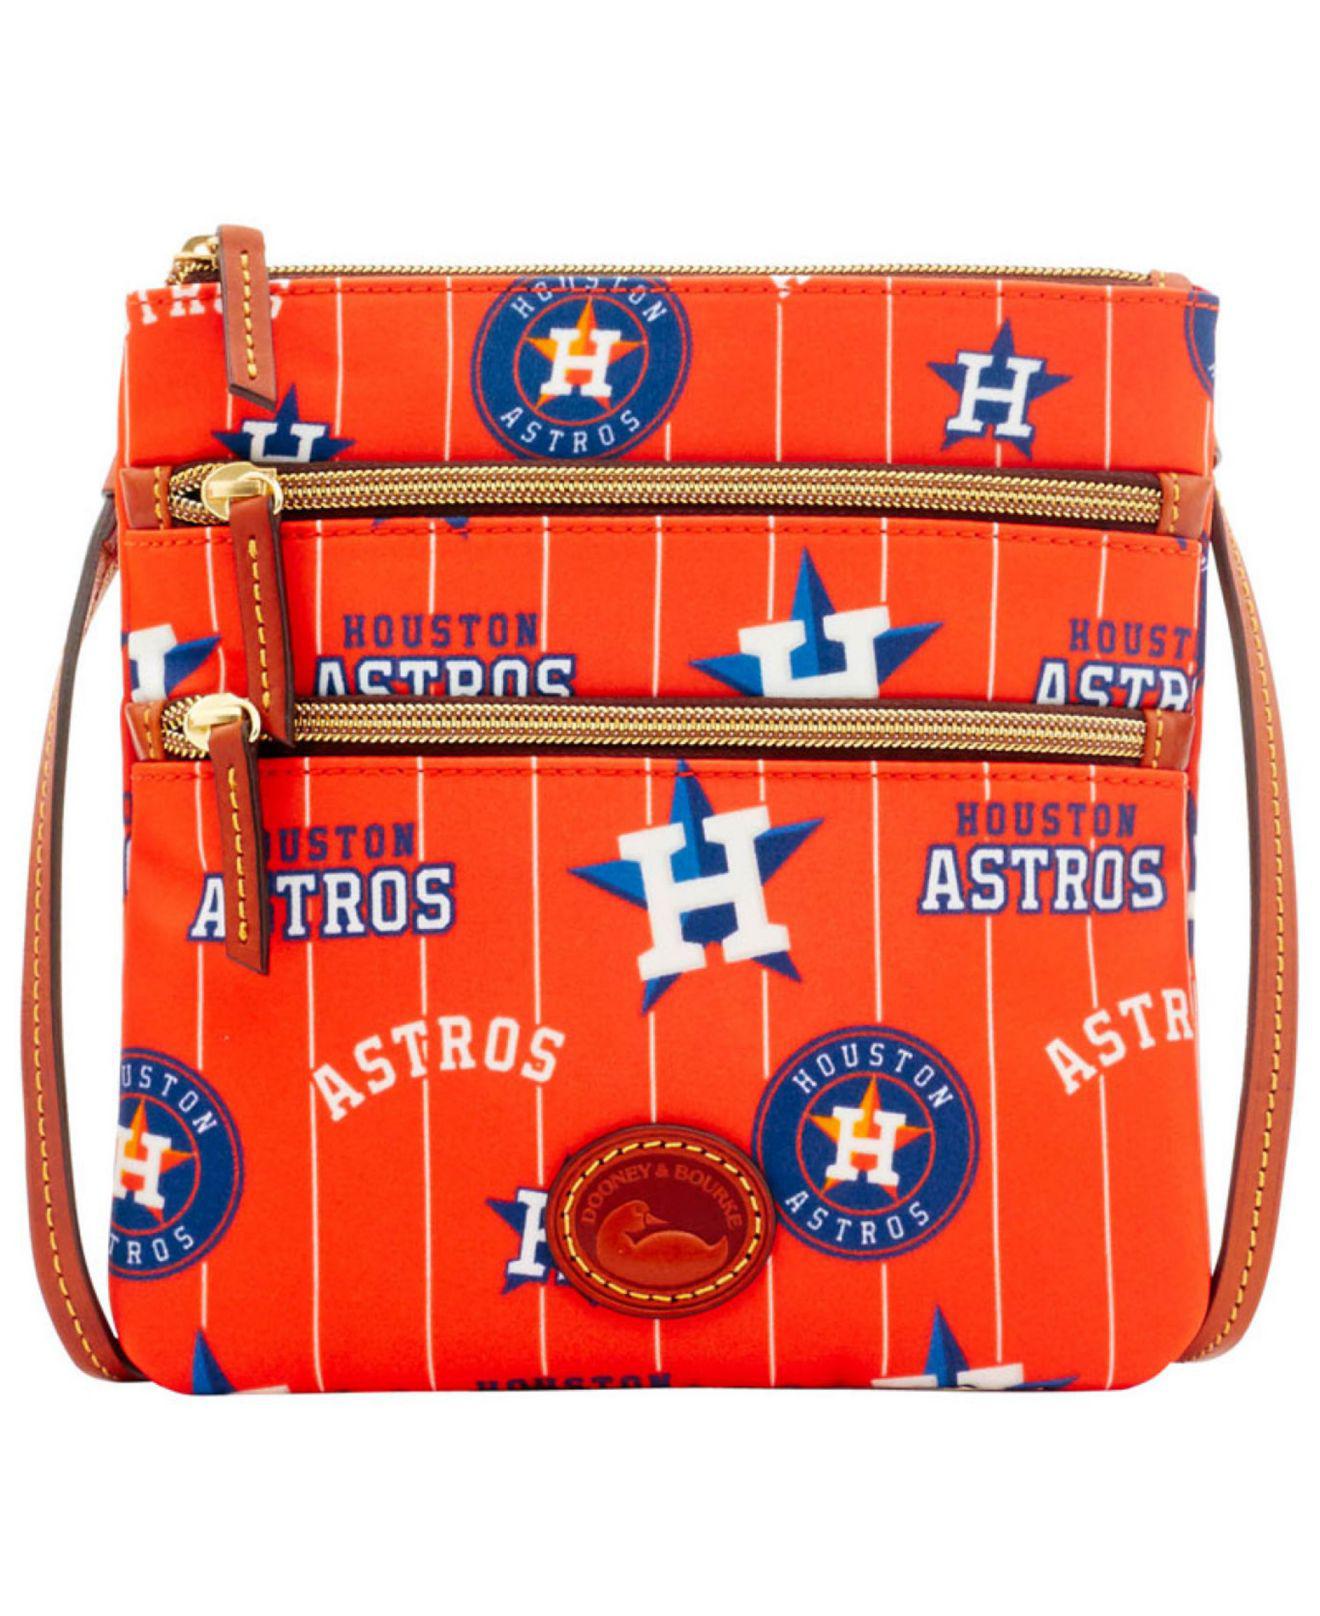 Dooney & Bourke Houston Astros Large Framed Purse